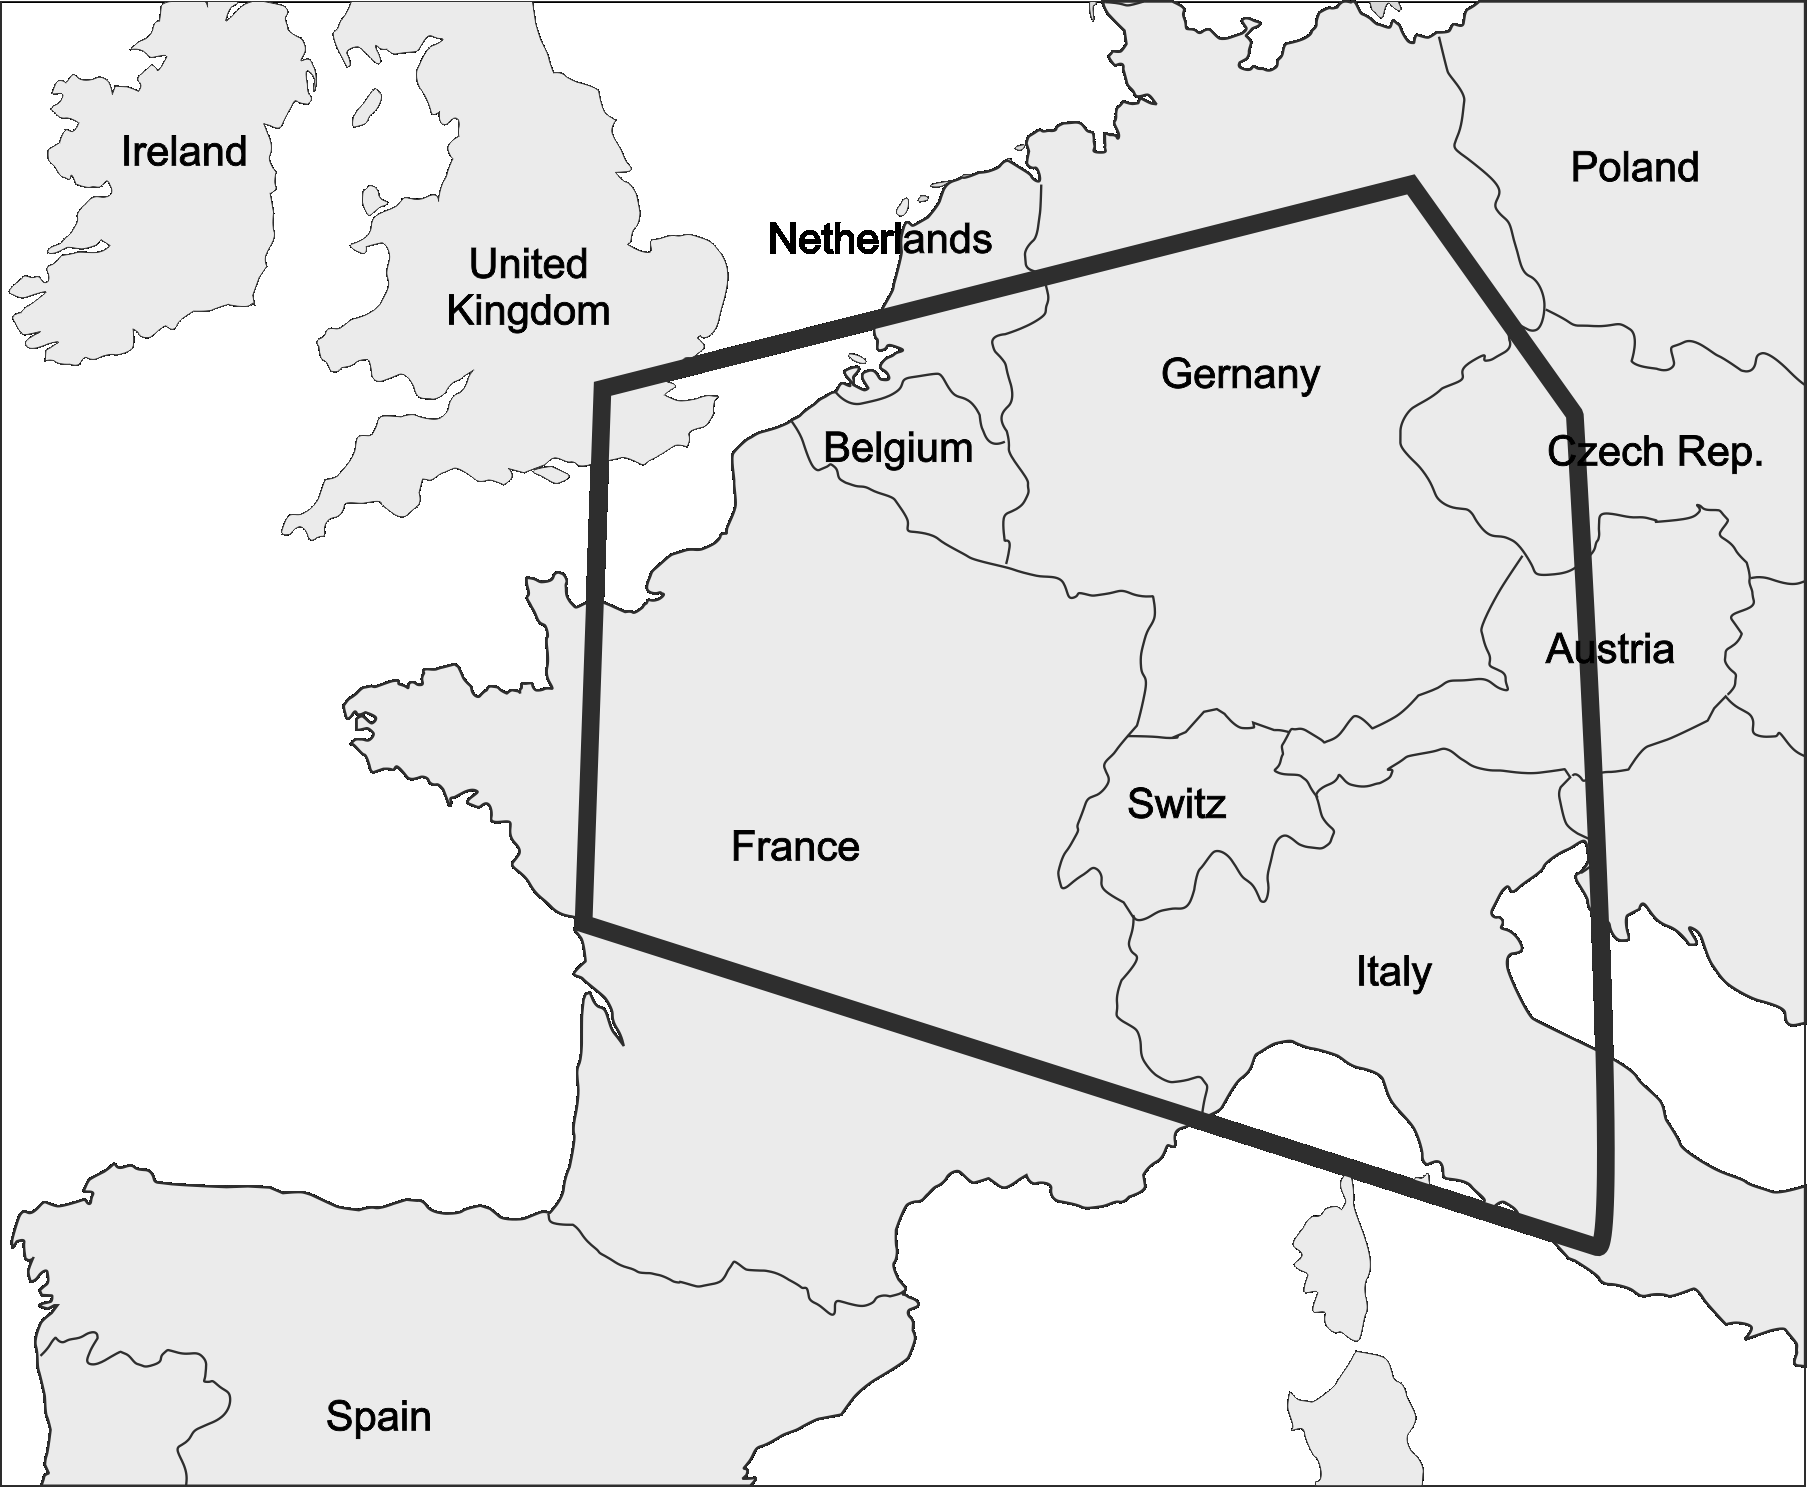 Extent of Occurrence for Epilobium brachycarpum in Europe, excluding the Iberian Peninsula.